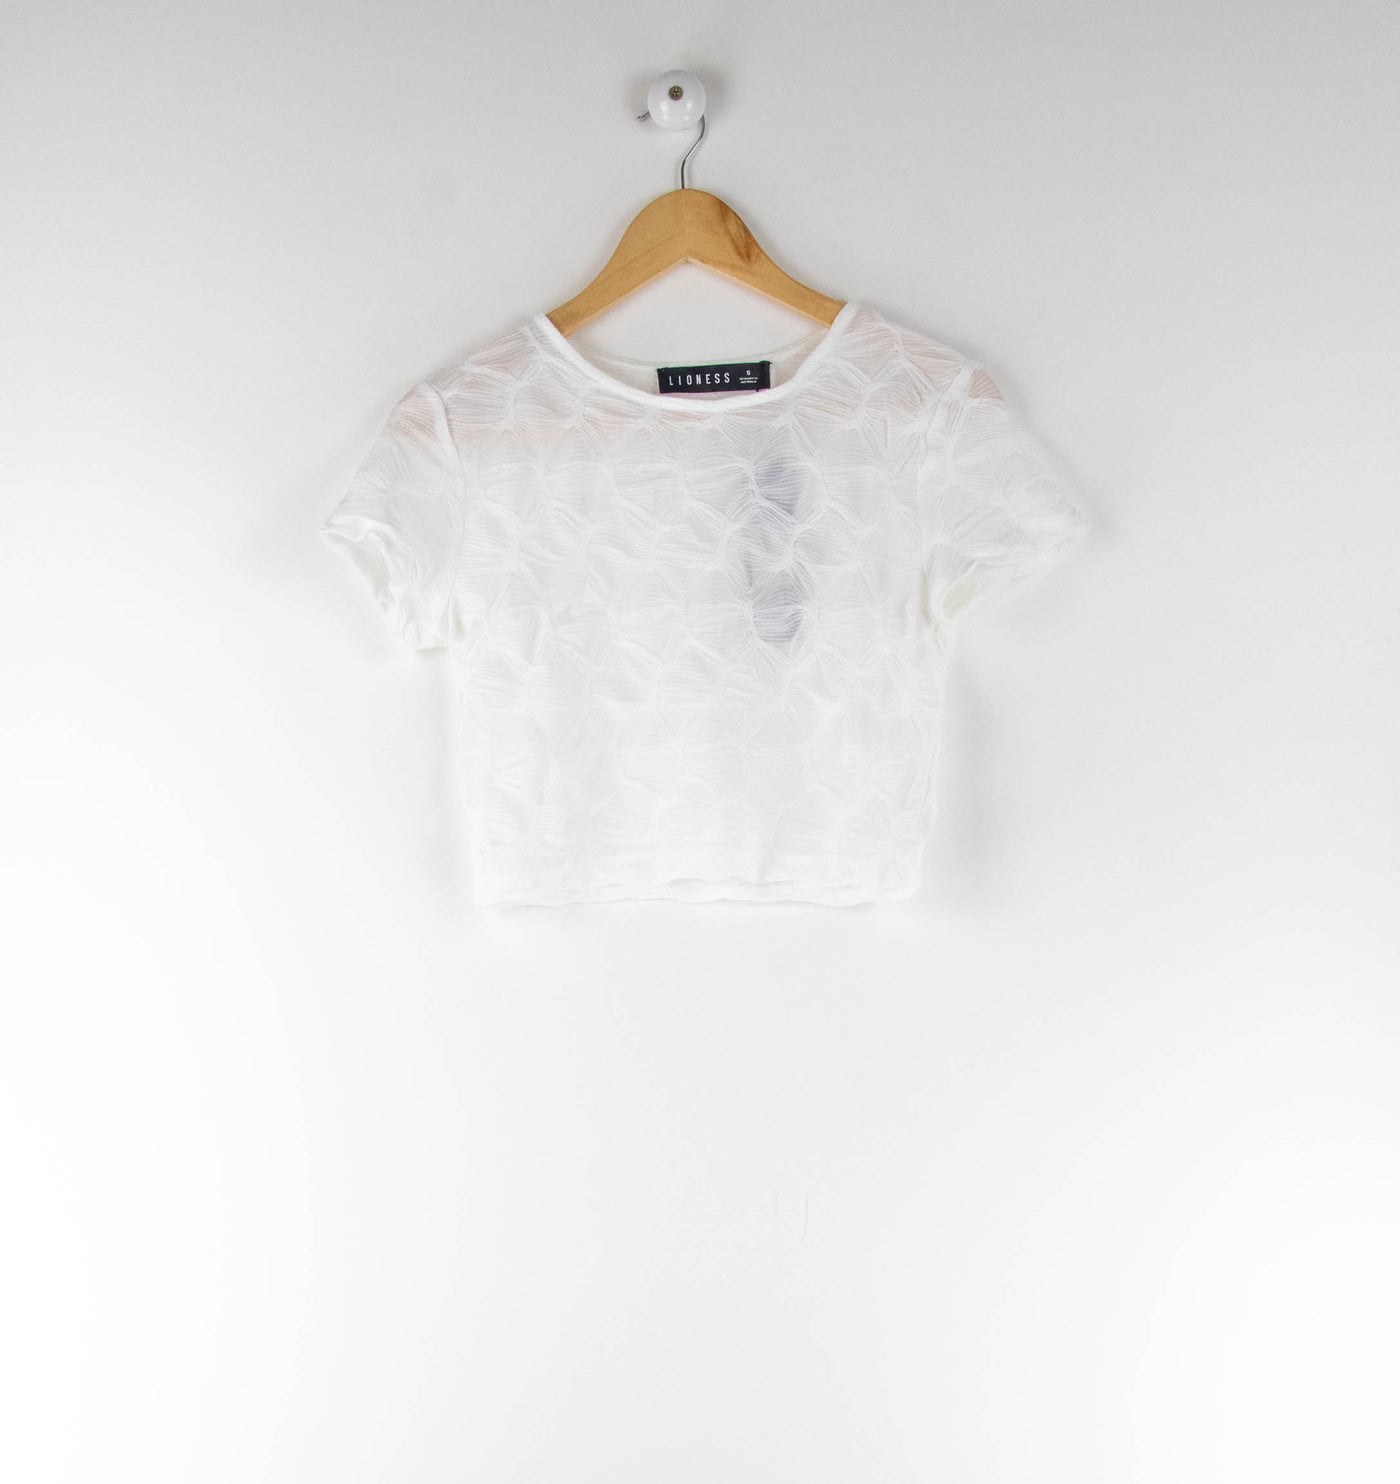 Camiseta drapeado blanco semitransparente NUEVO